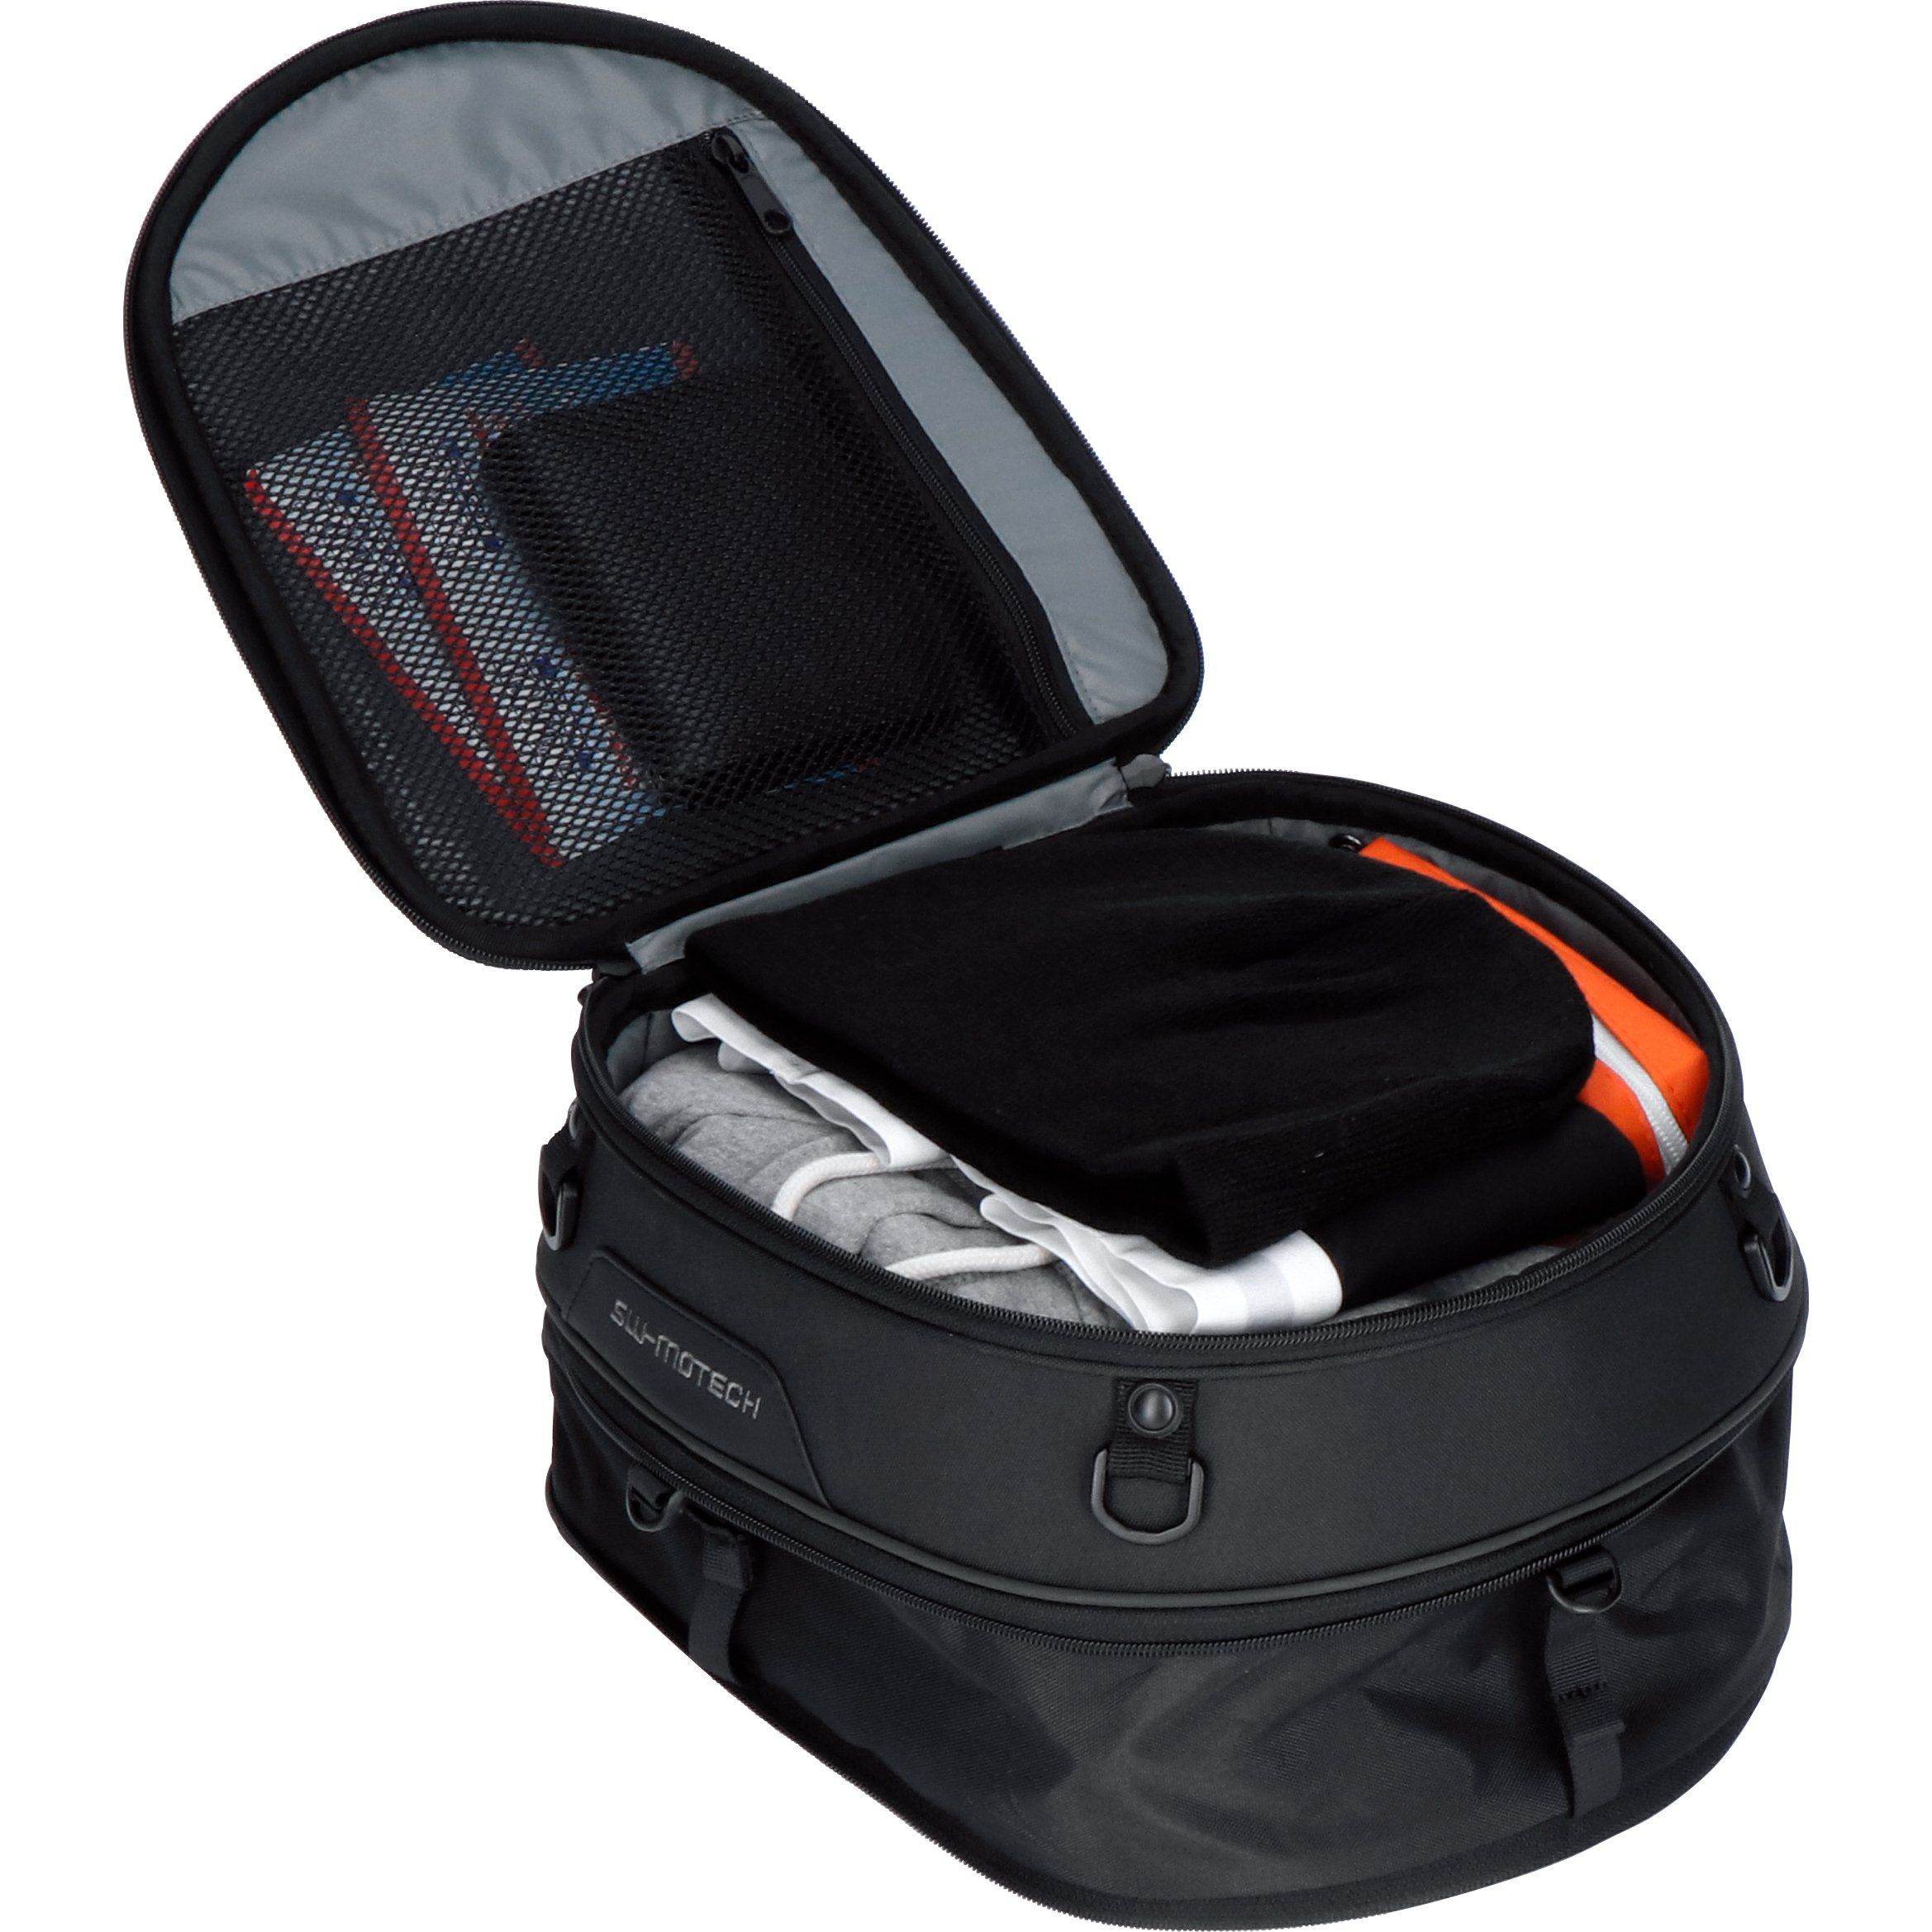 rearbag ION S 7-15 liters black